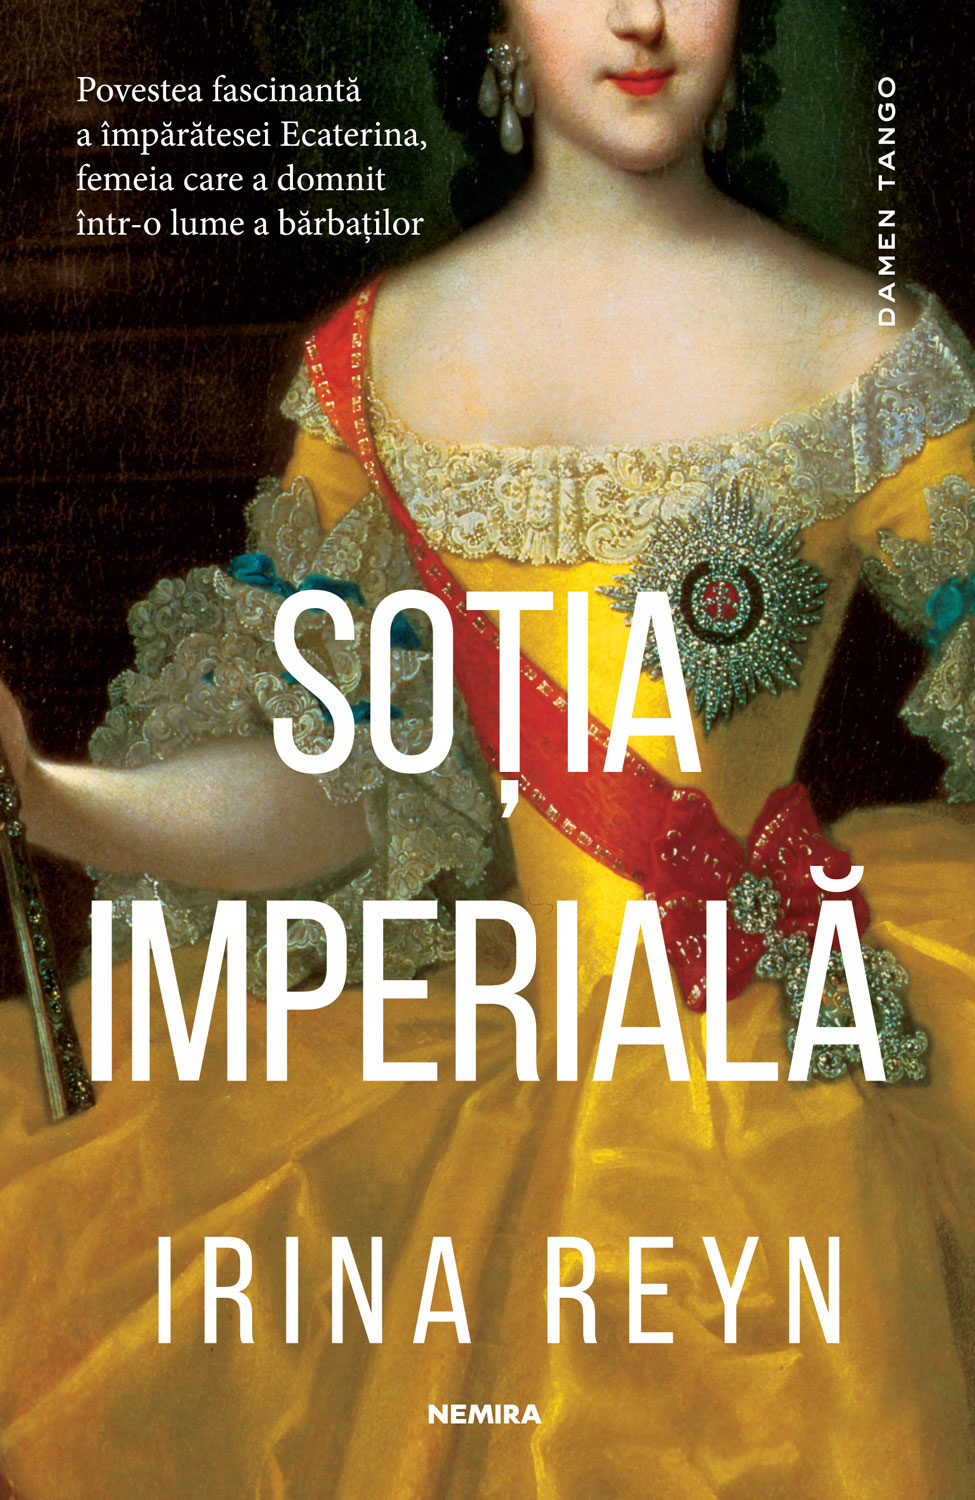 eBook Sotia imperiala - Irina Reyn